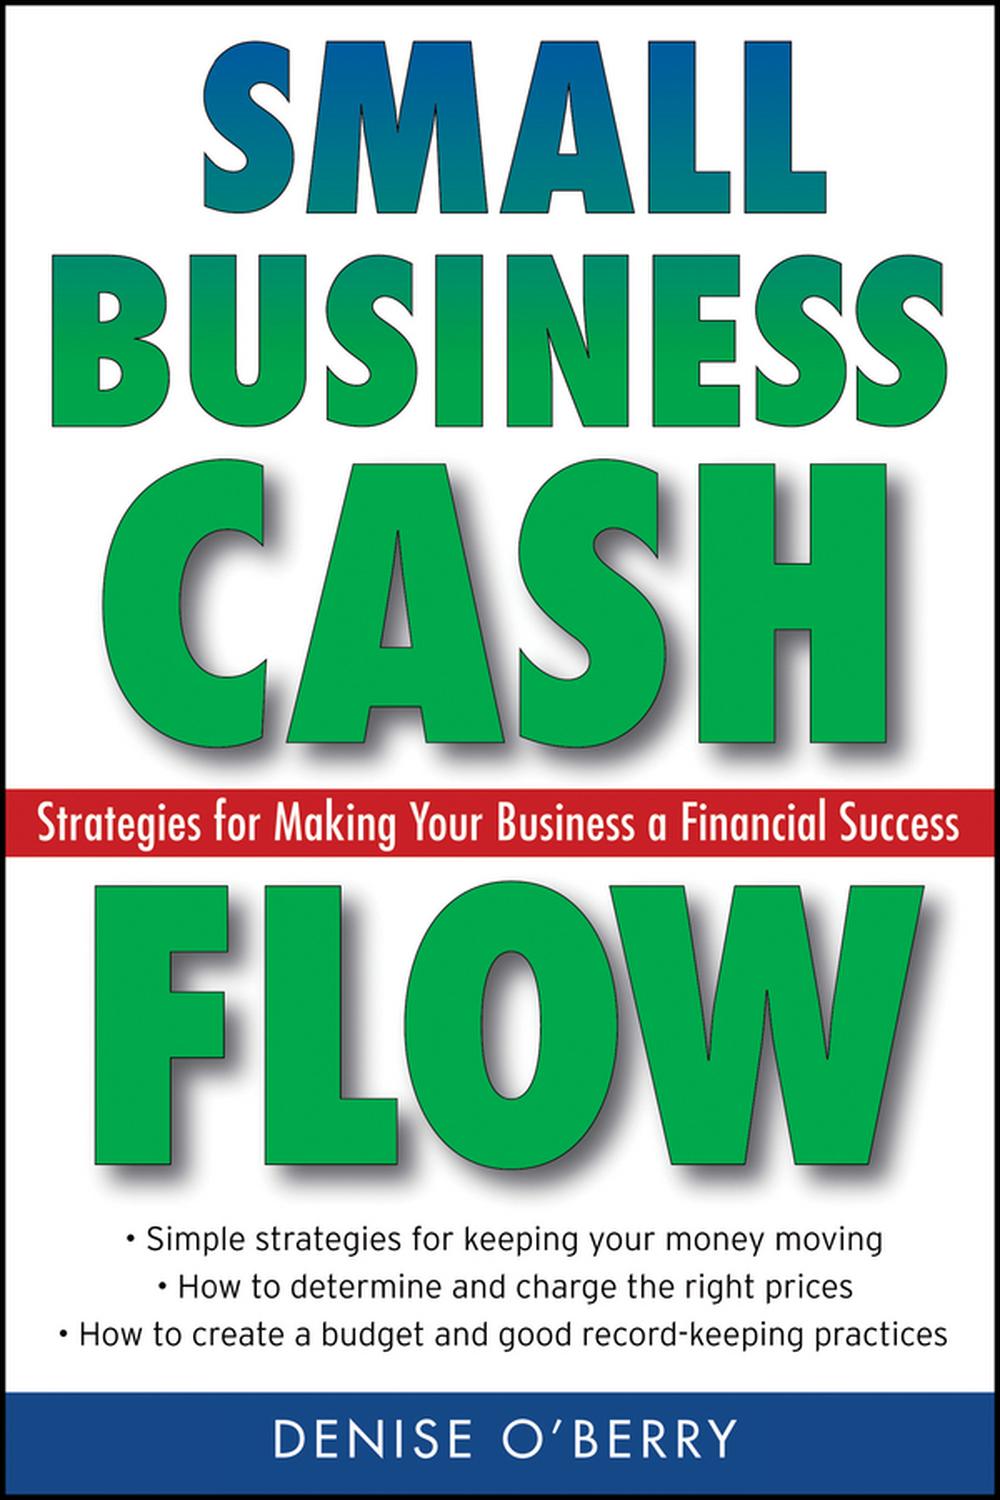 Small Business Cash Flow - Denise O'Berry